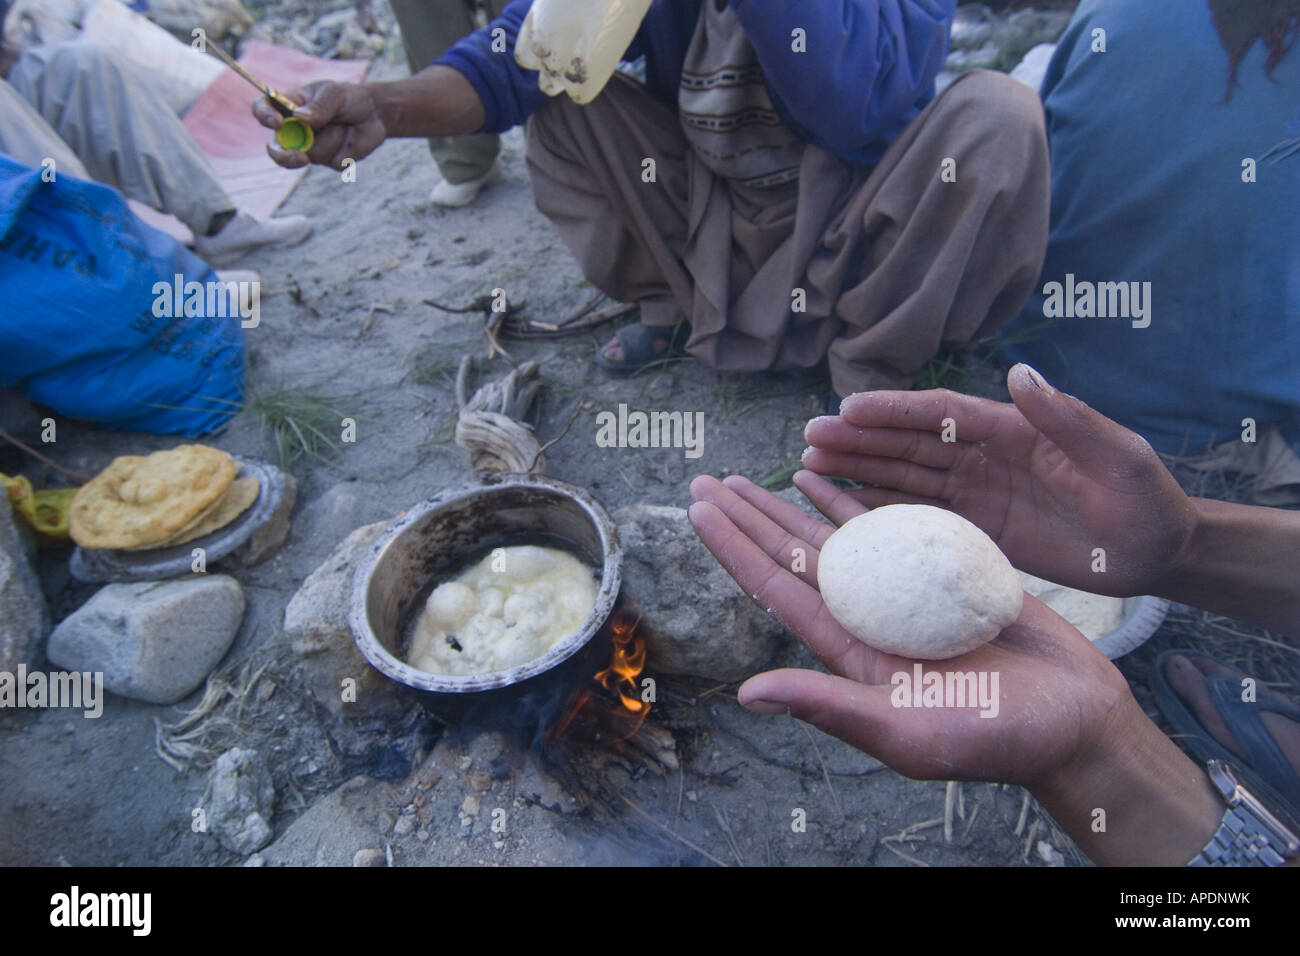 A Balti man making chapatis in Pakistan Stock Photo